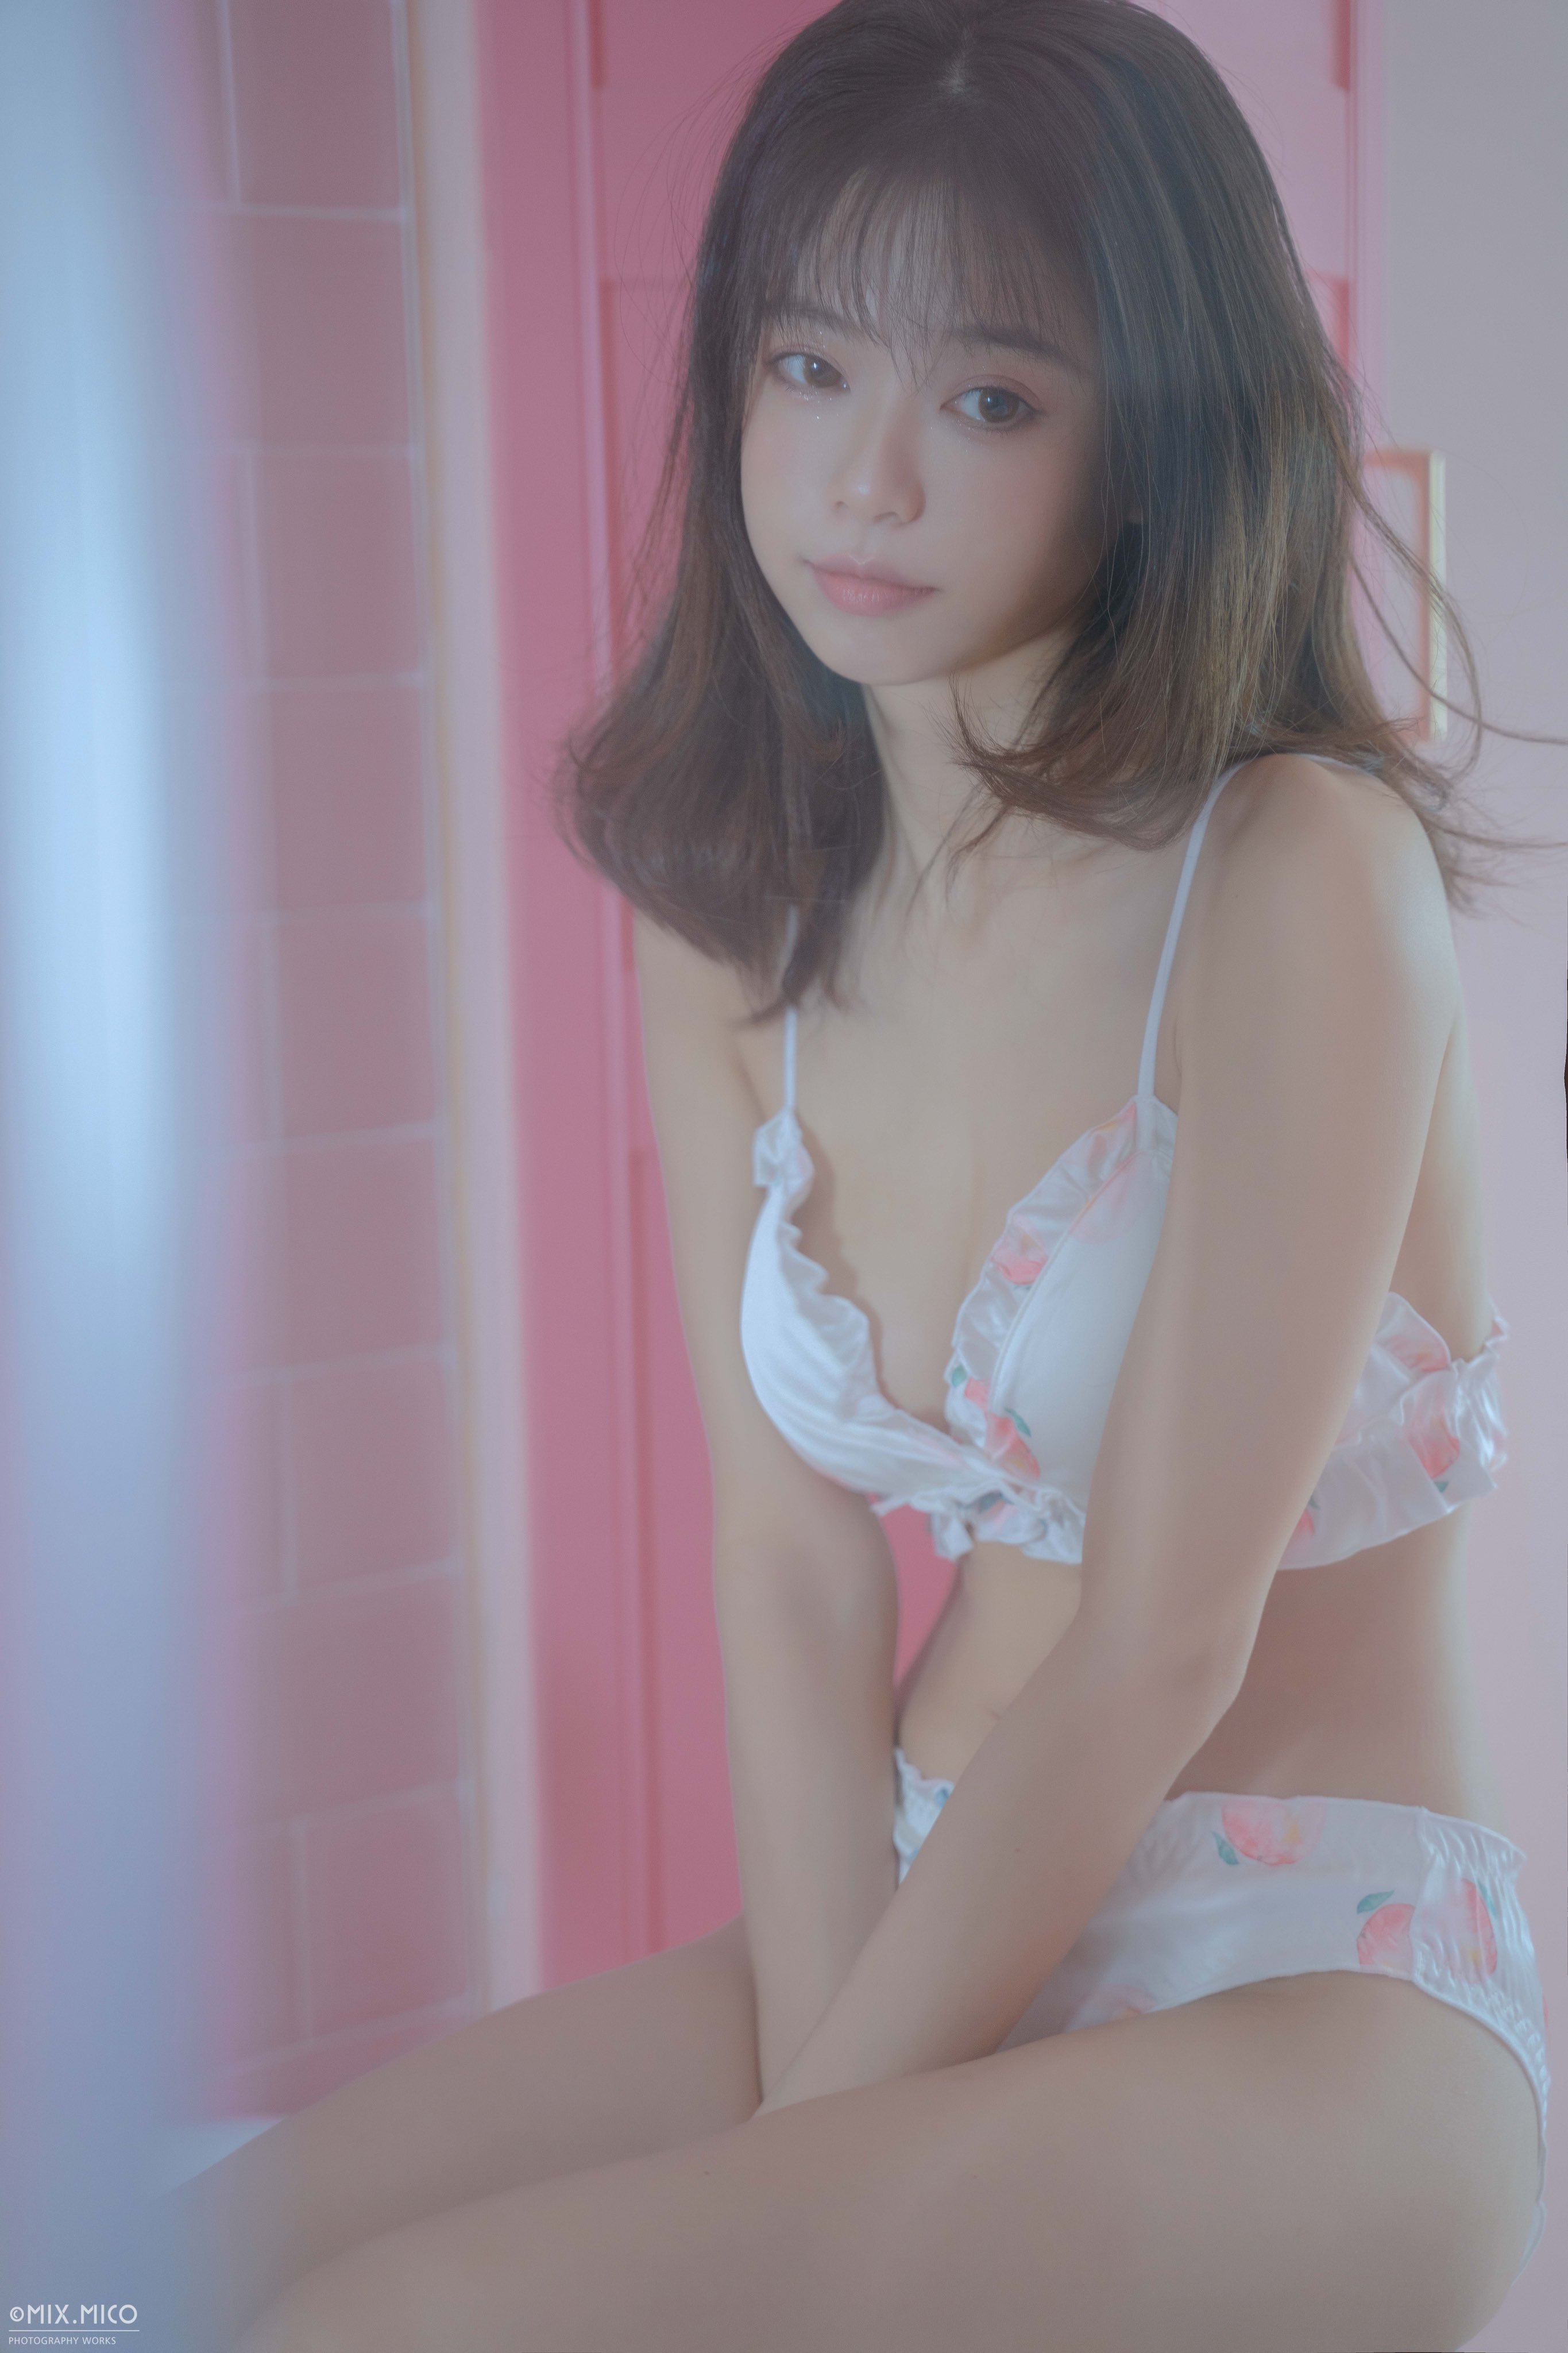 People 2730x4096 Mico women AixiLove brunette Asian lingerie bra panties blushing pink